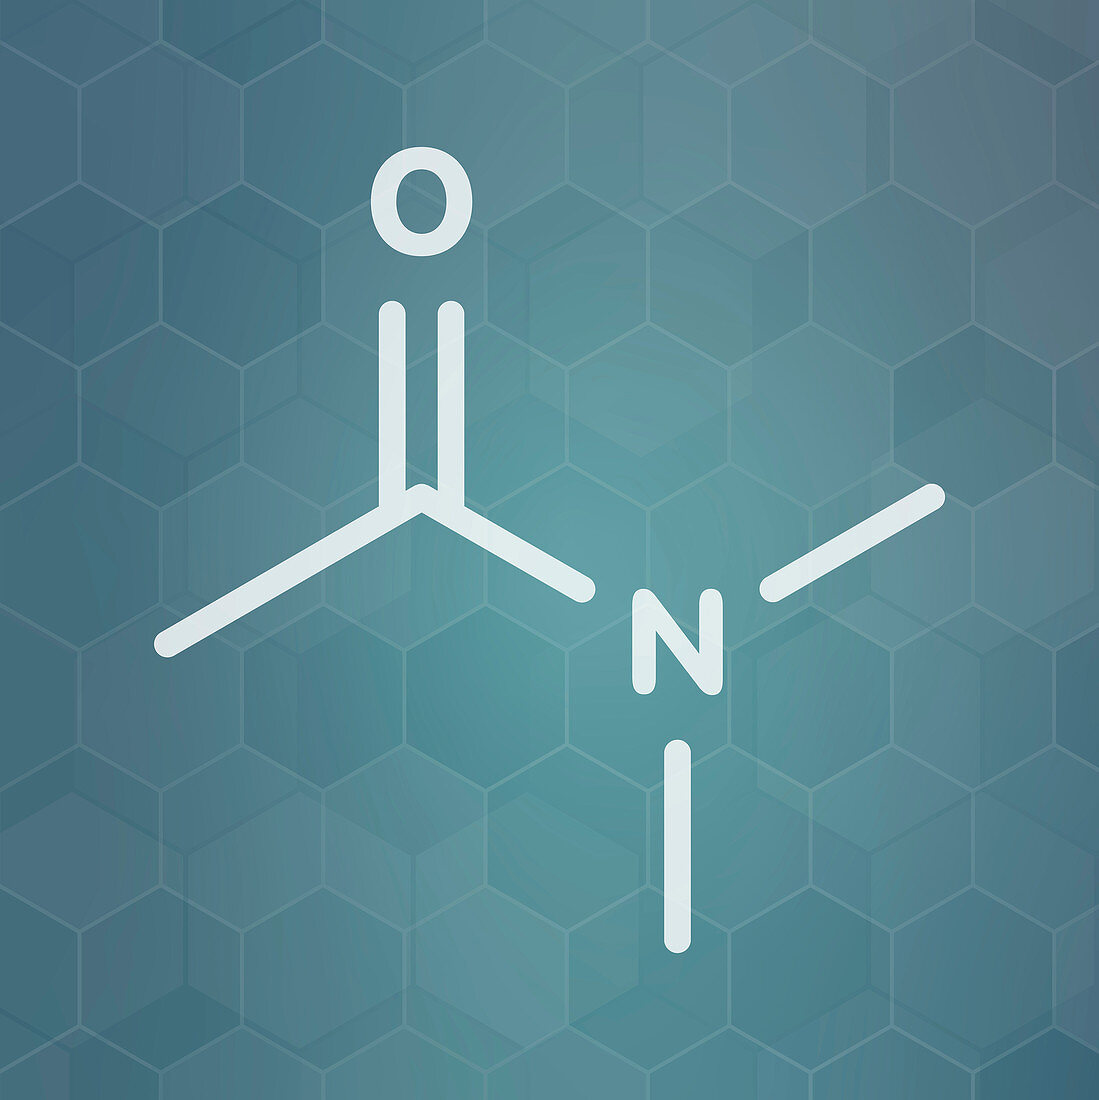 Dimethylacetamide chemical solvent molecule